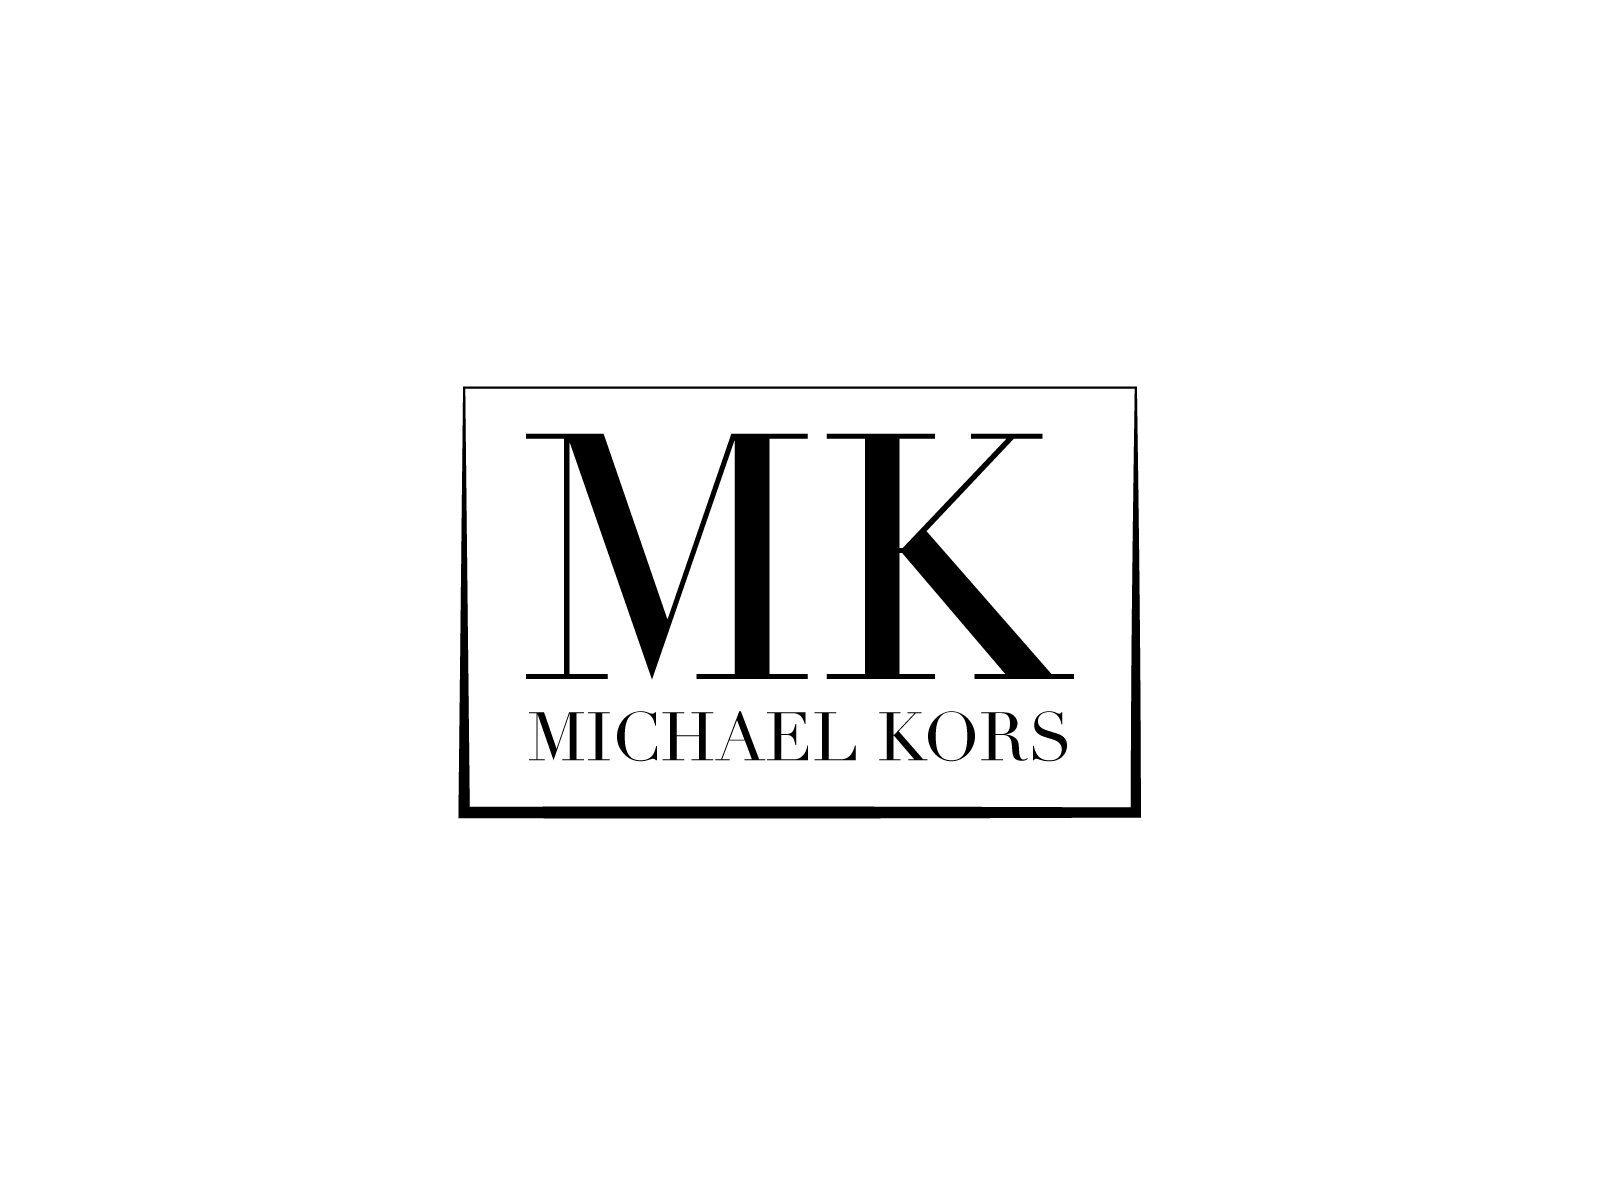 Michael Kors Brand - Monochrome Minimal Logo by Vishnu Moulish on Dribbble